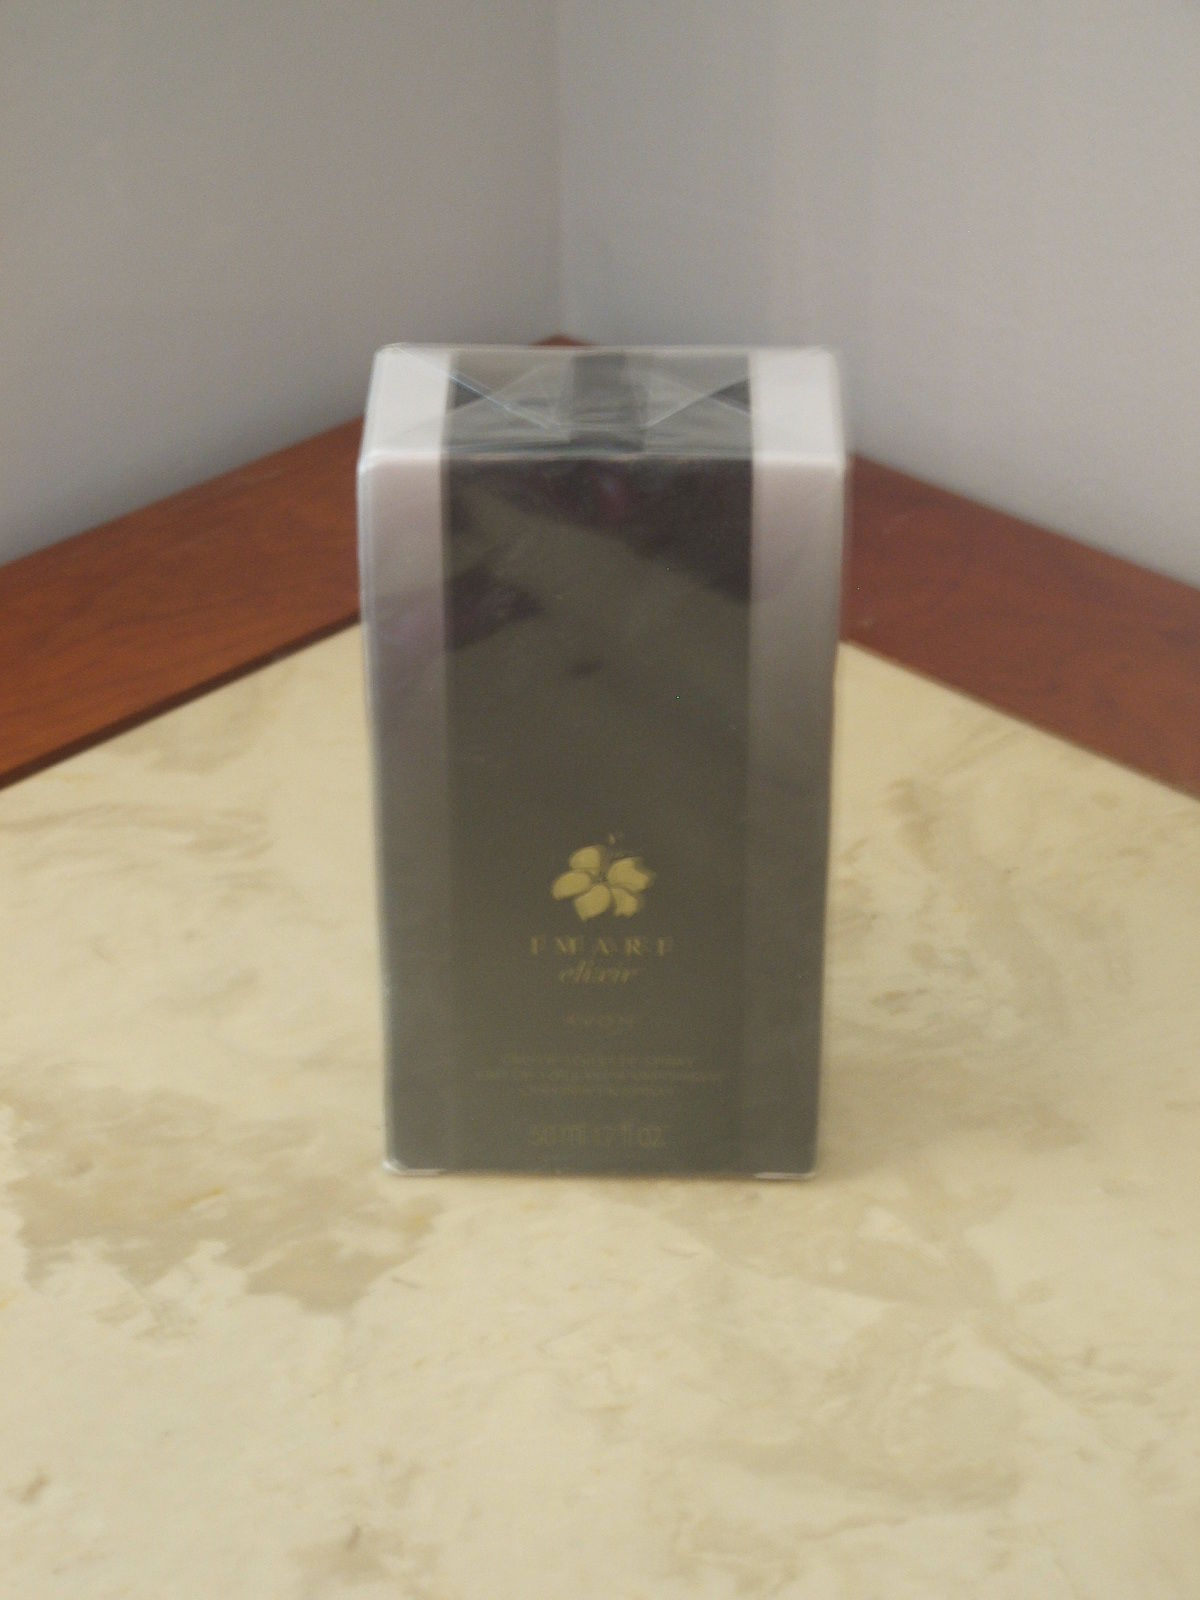 new  sealed box avon imari elixir cologne 1.7 fl. oz - $29.70